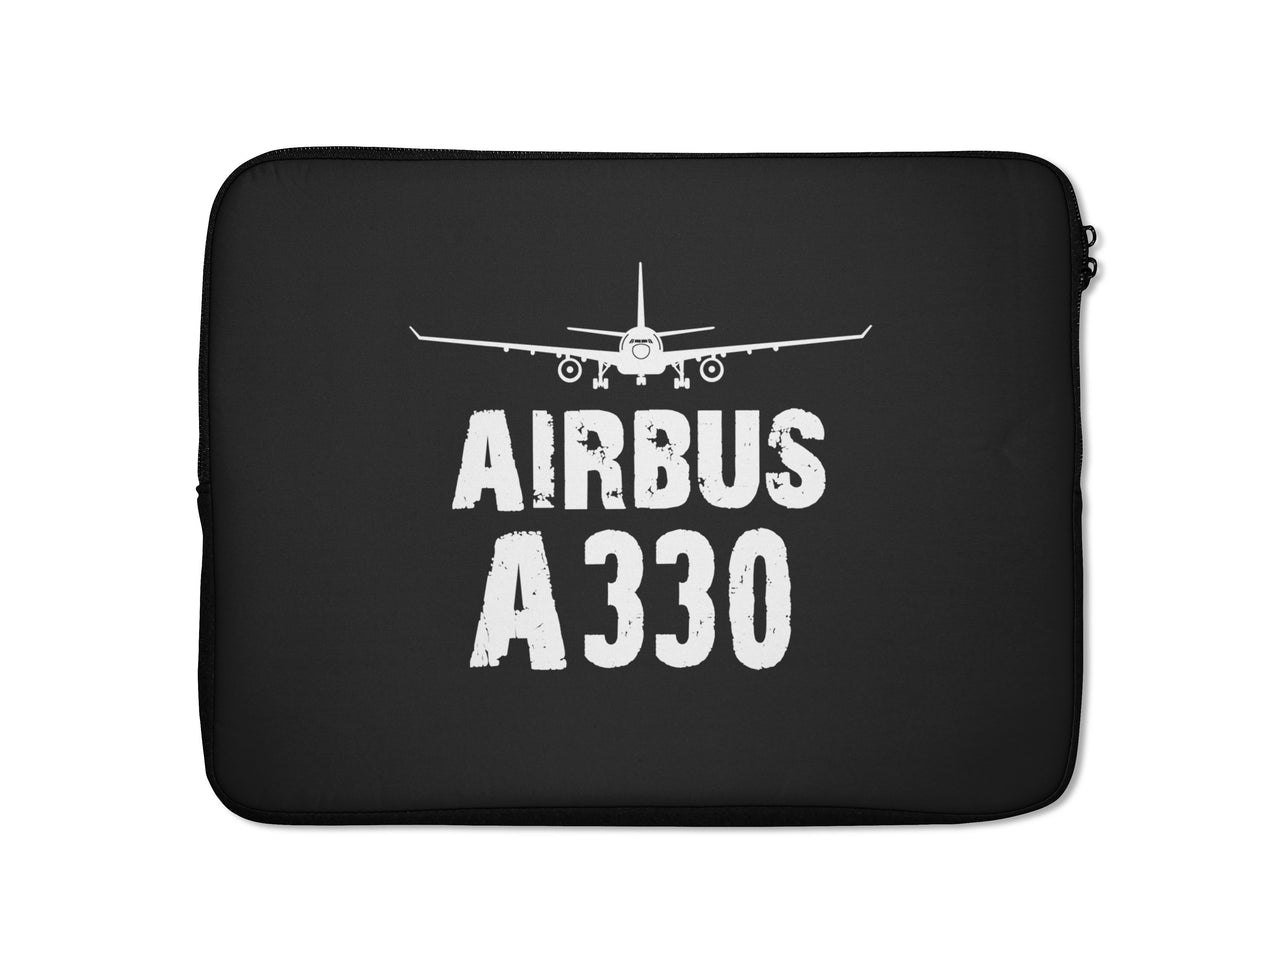 Airbus A330 & Plane Designed Laptop & Tablet Cases